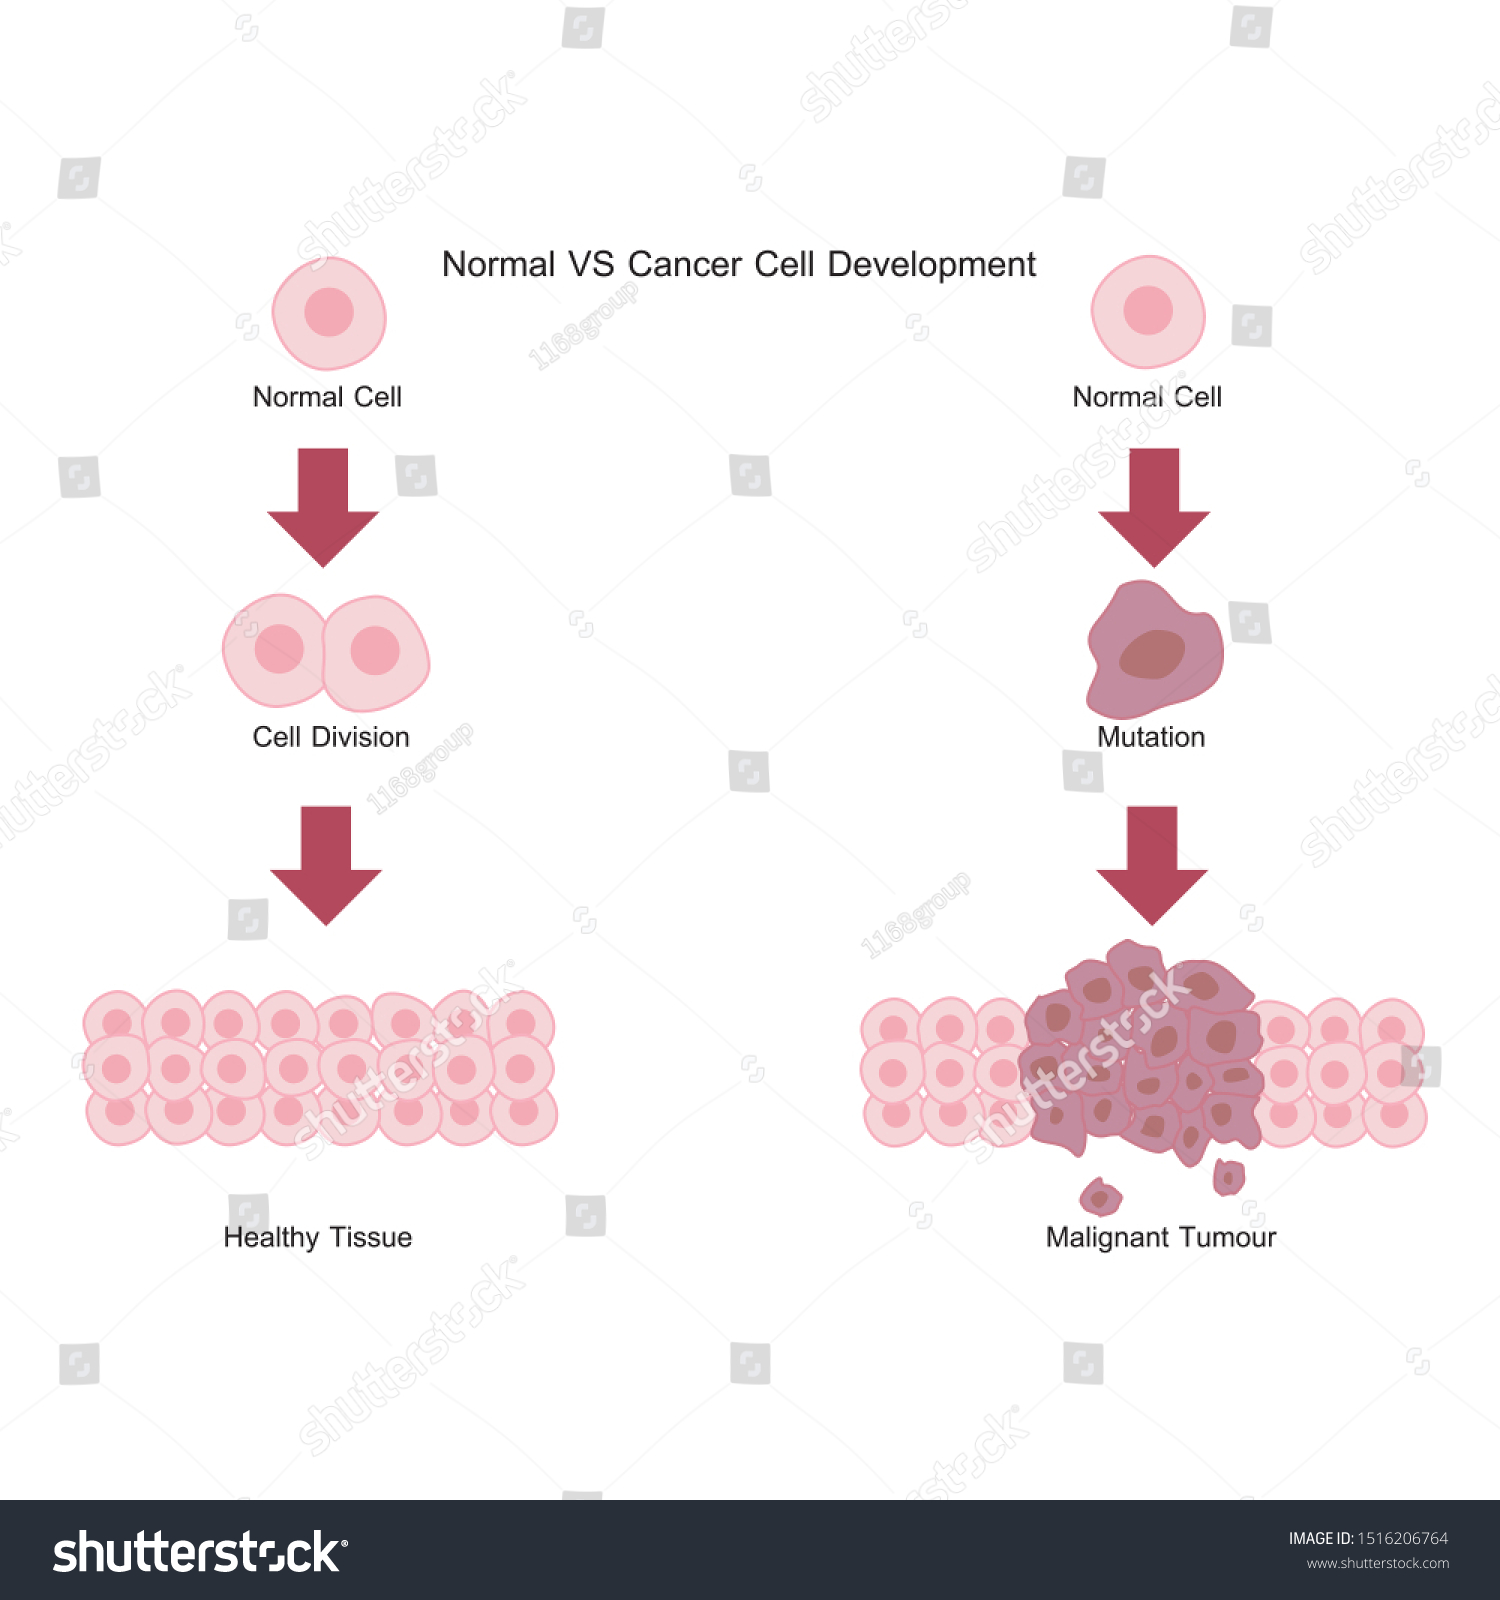 Diagram Cancer Cell Development Normal Cells 库存矢量图（免版税）1516206764 Shutterstock 8030